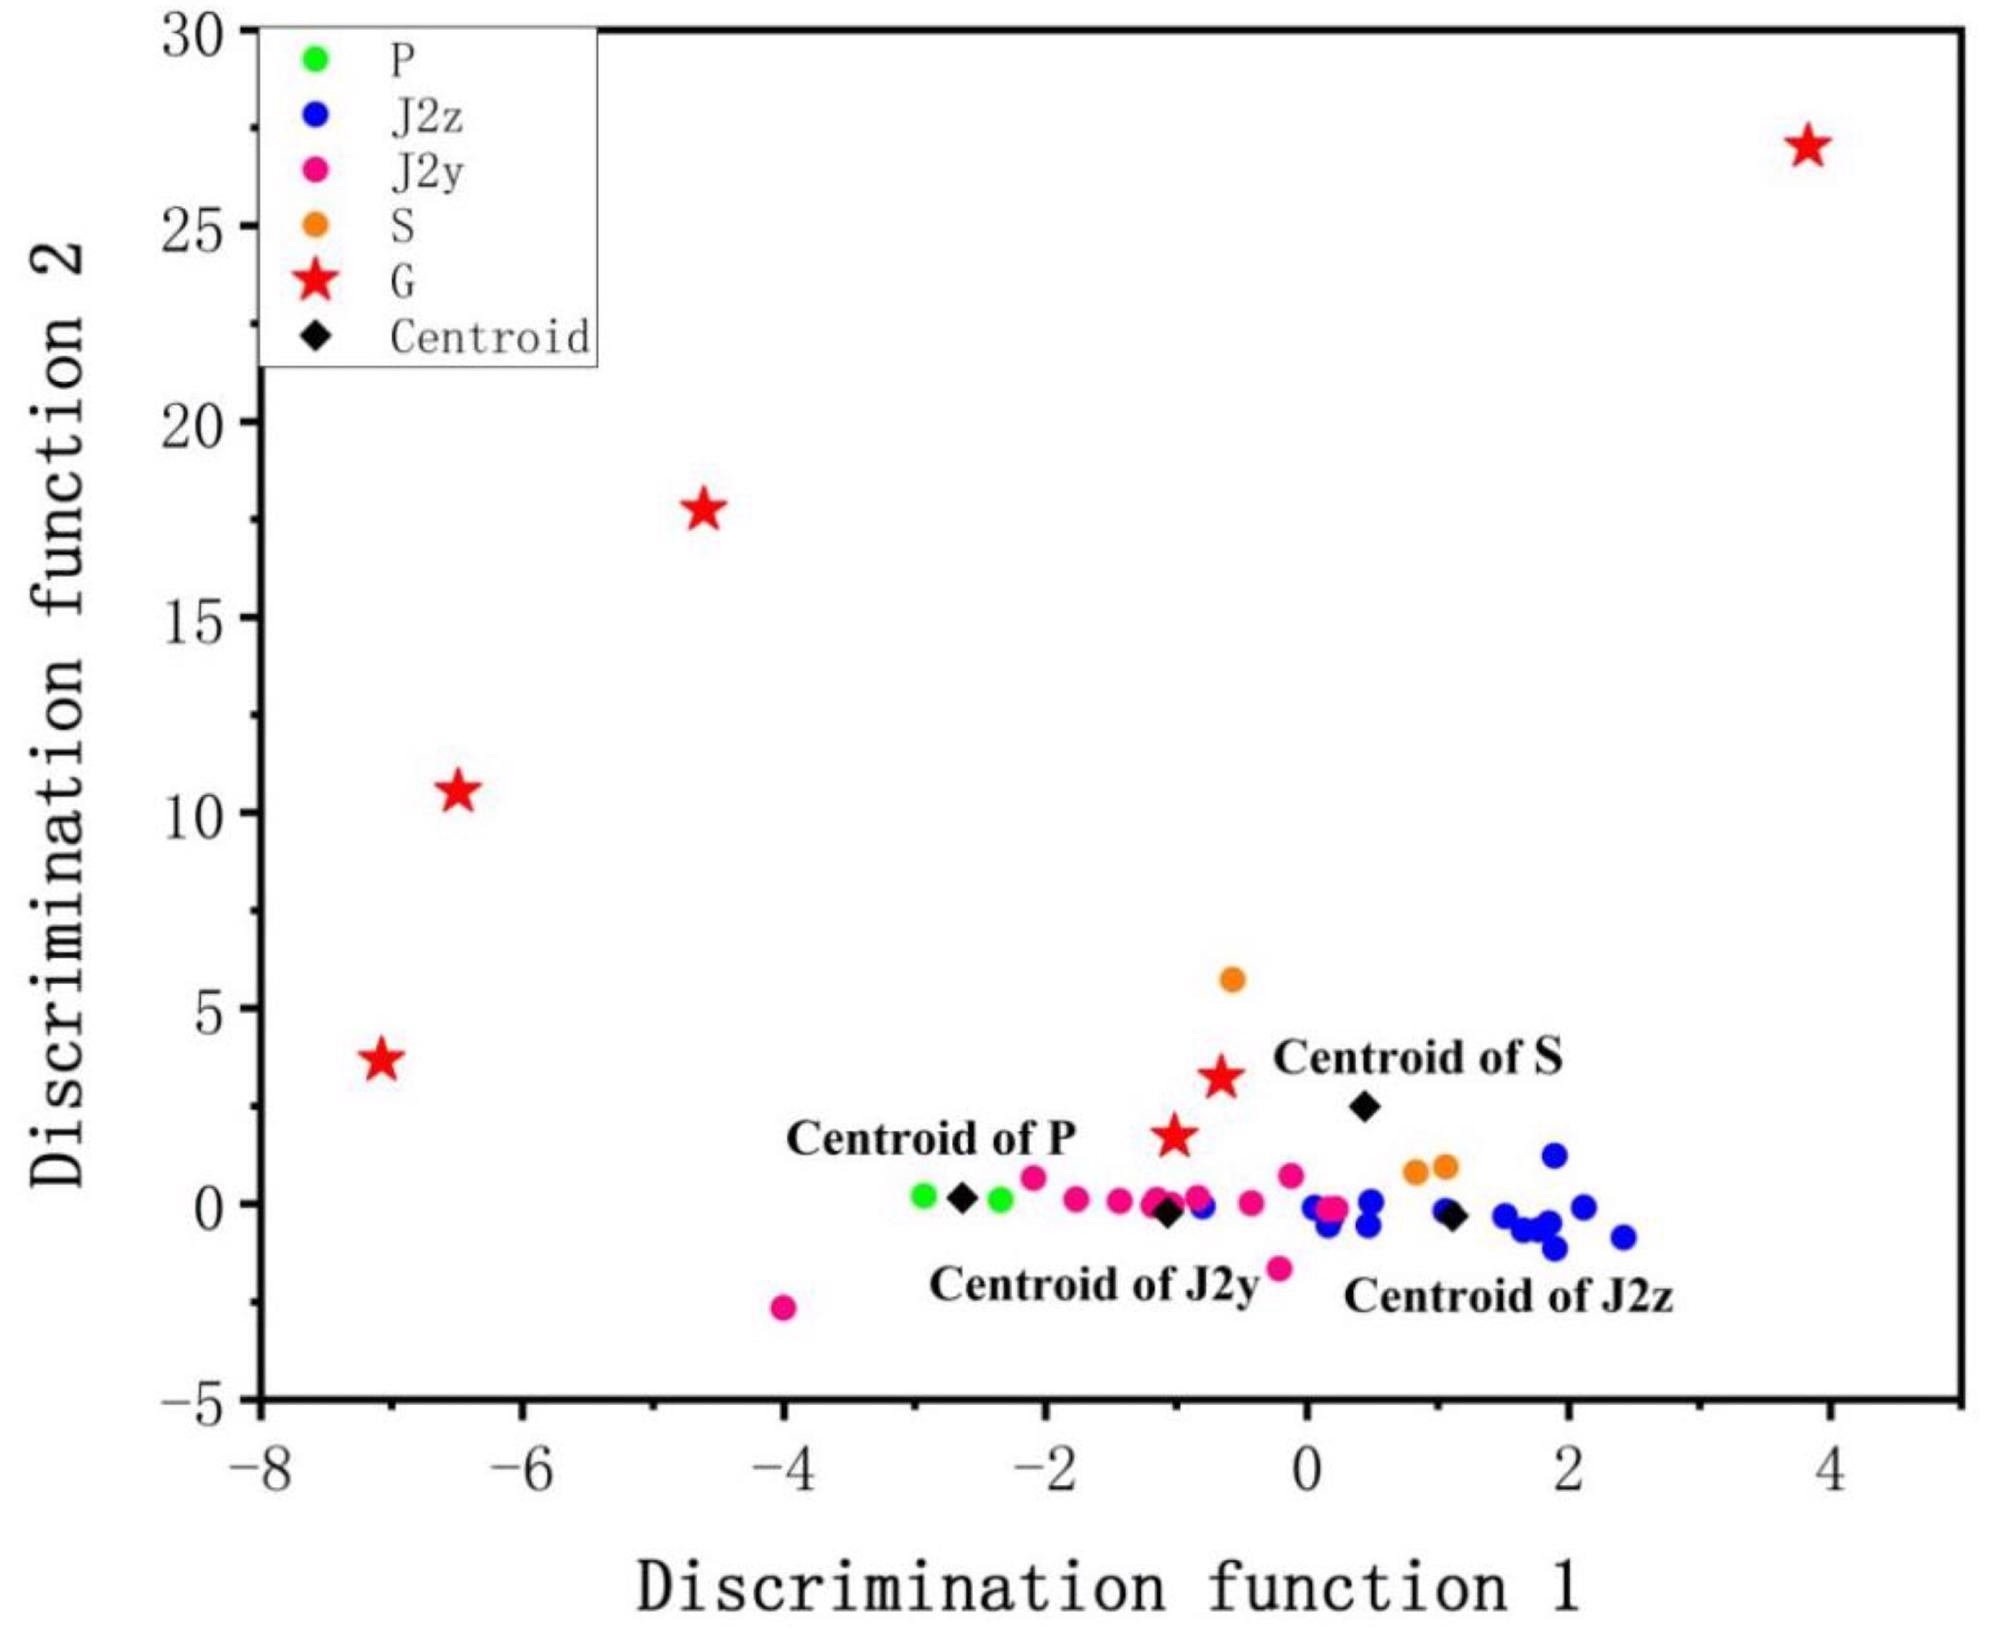 Spatial distribution of water sample discriminant function.